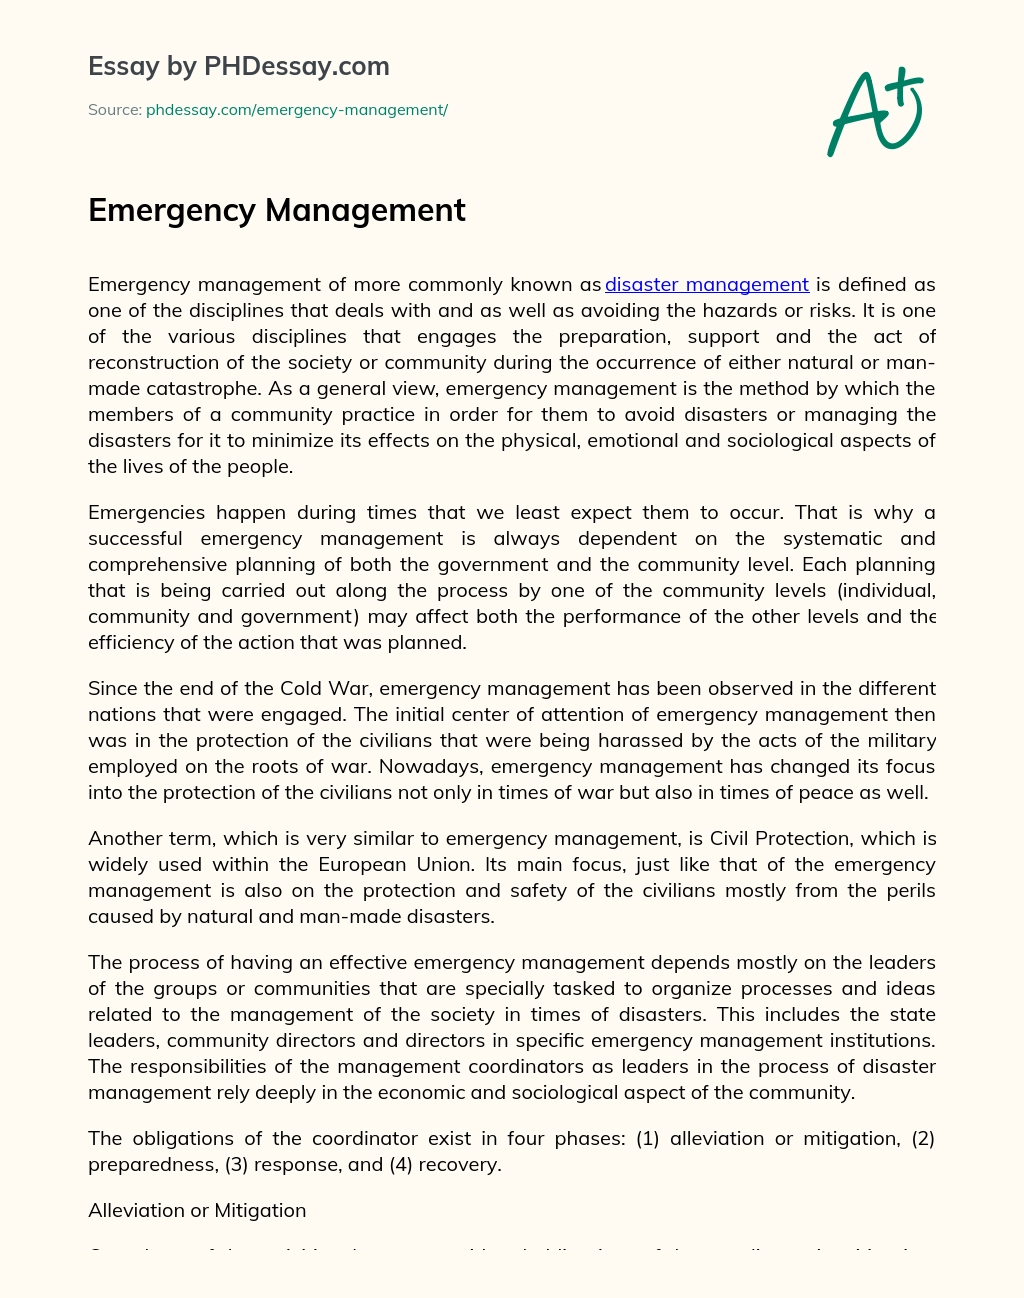 Emergency Management essay